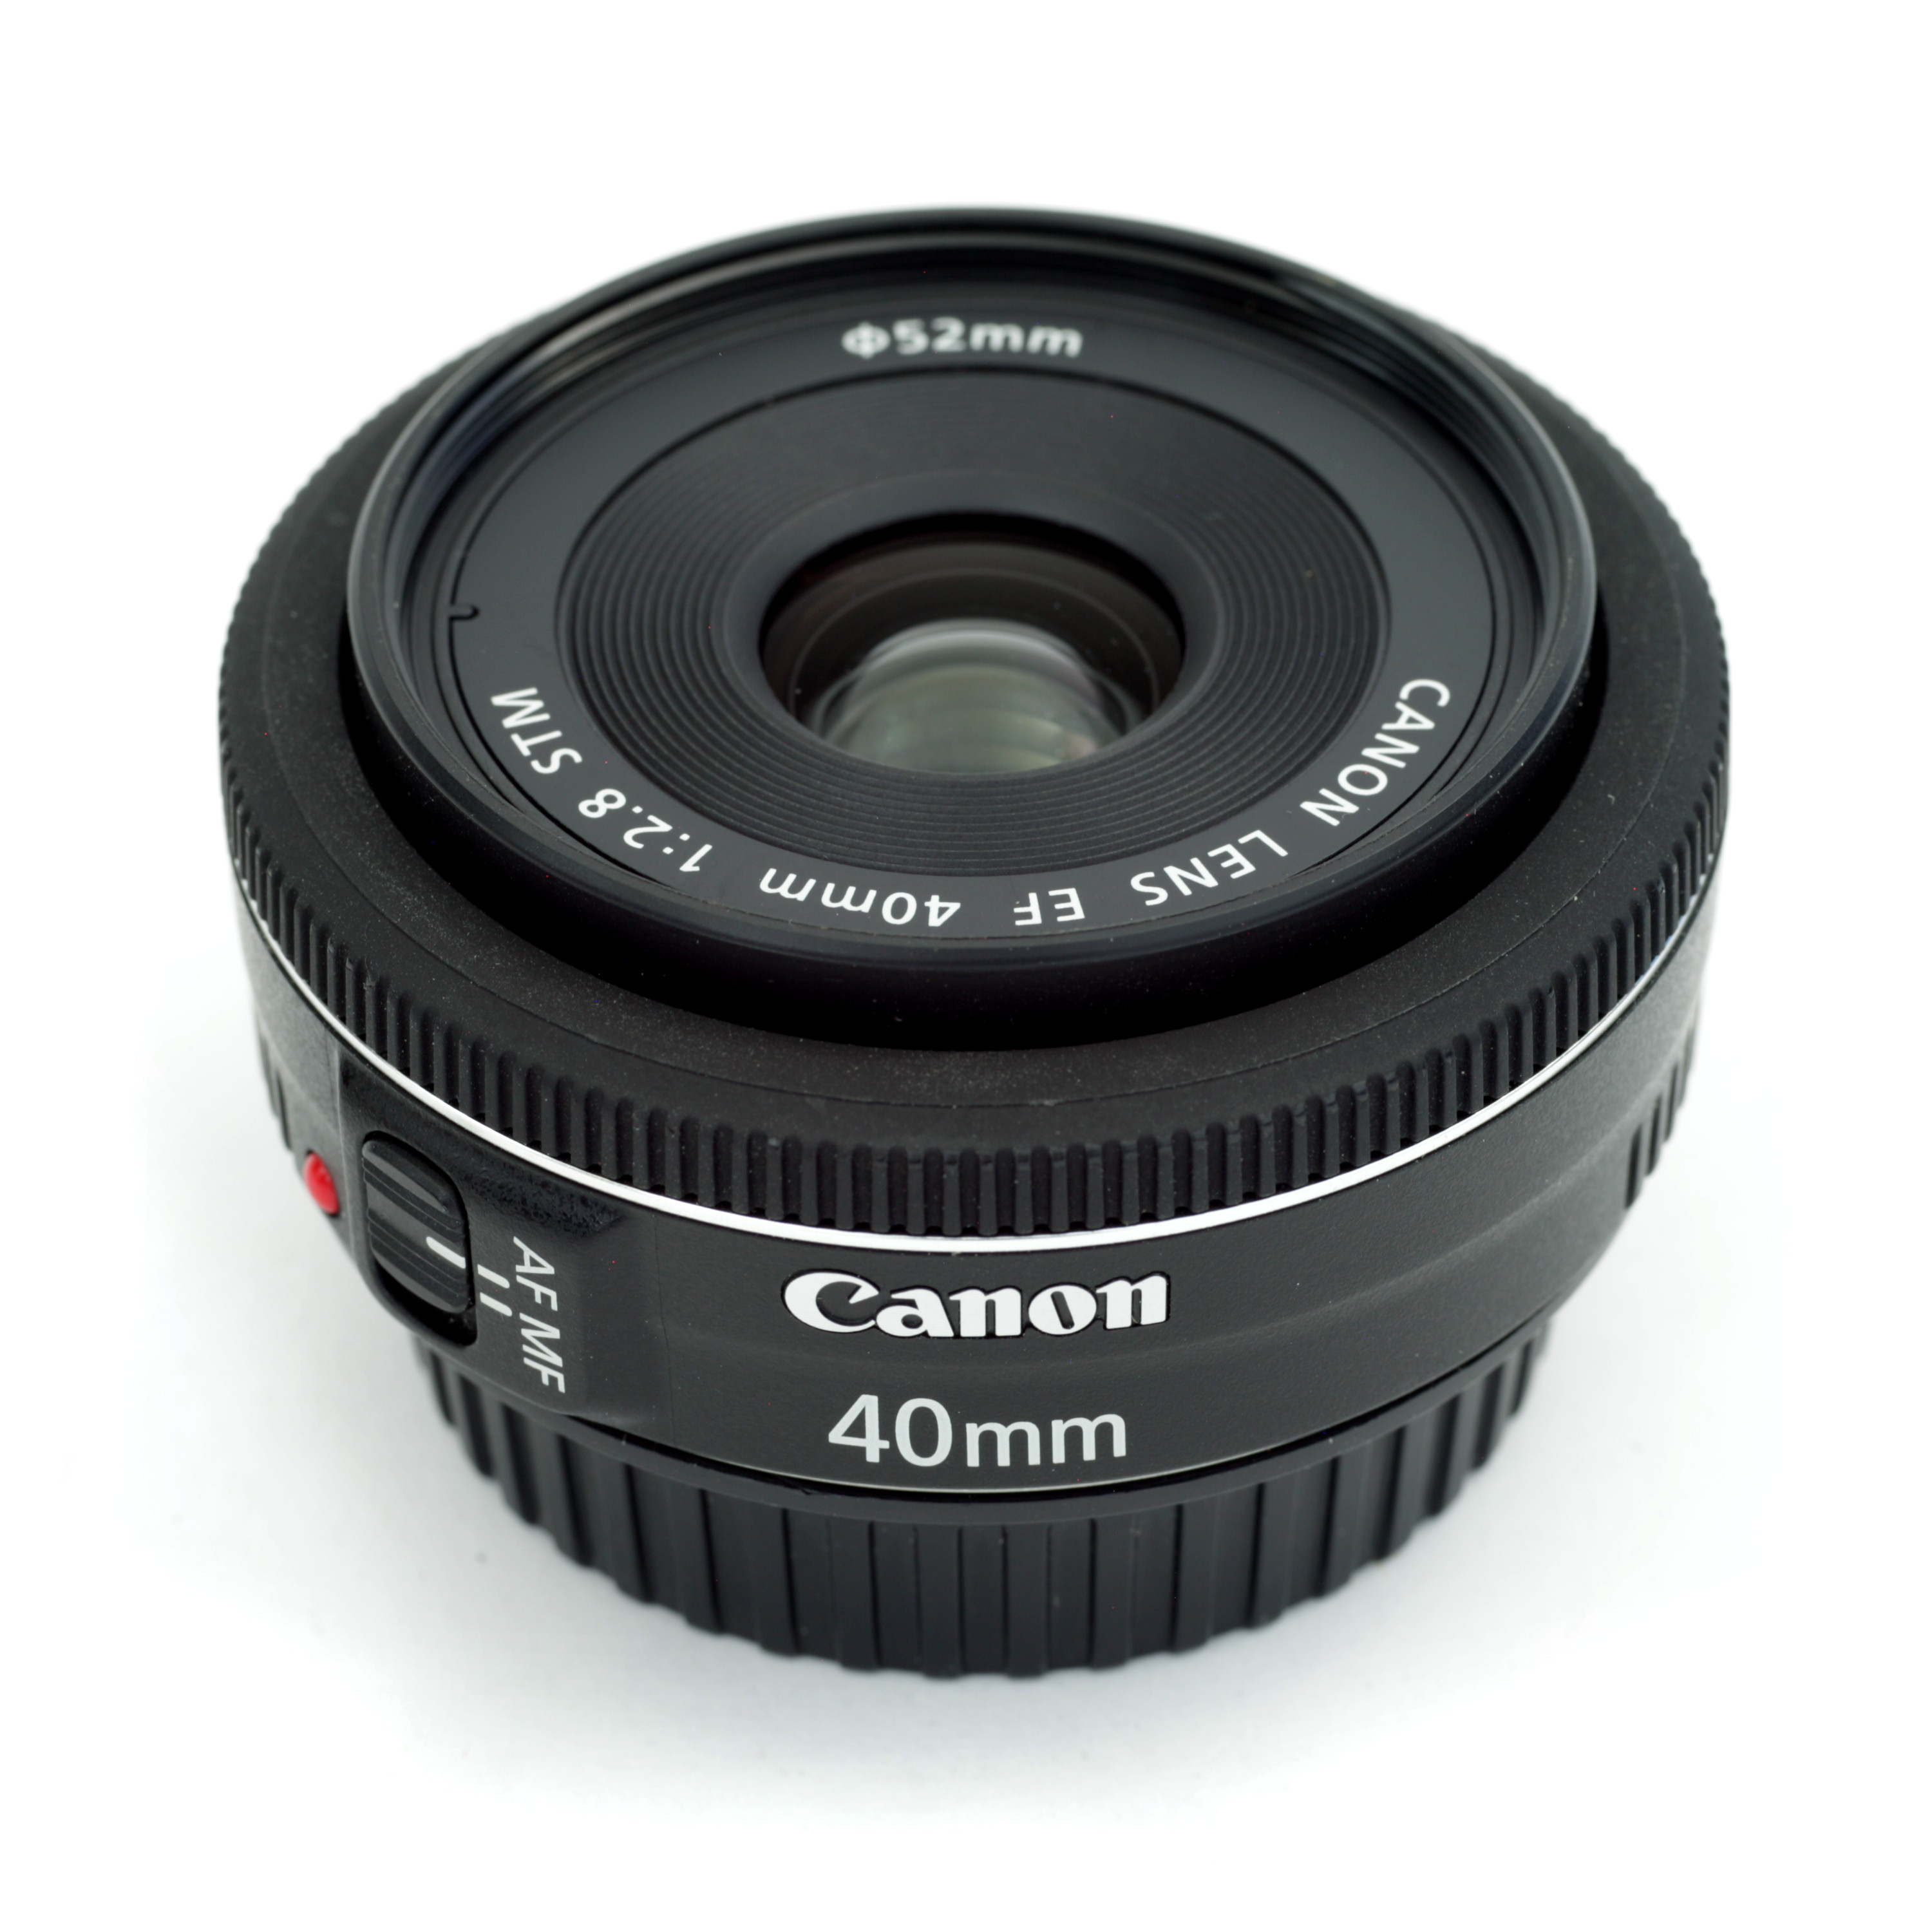 Canon EF mm lens   Wikipedia